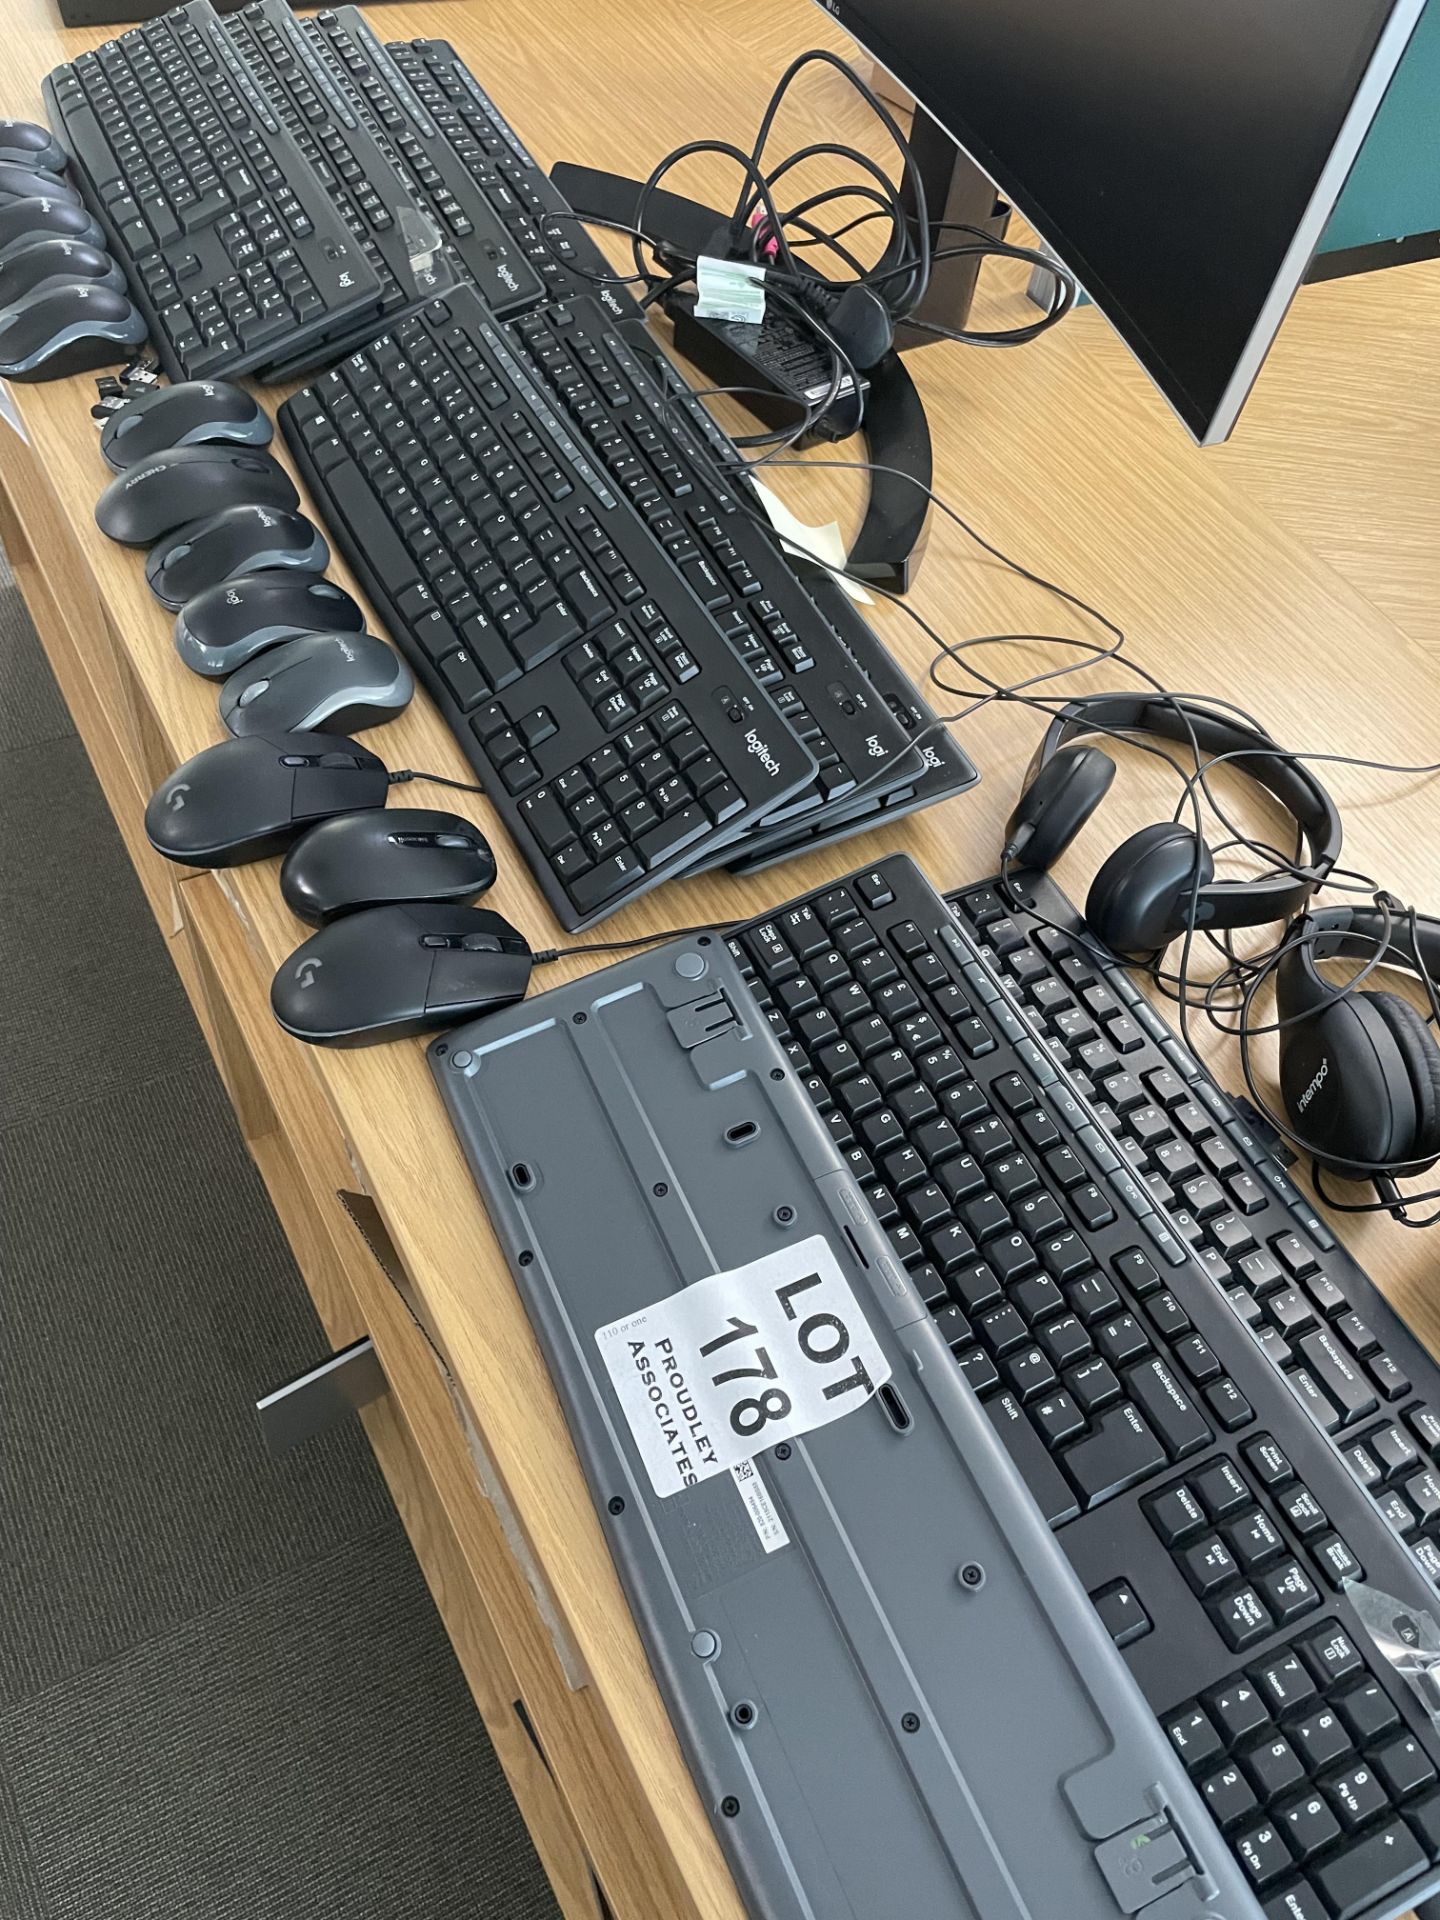 11 x Logitech wireless keyboards, 11 x wireless mice, 3 x USB headphones plus 2 x Logitech cable –